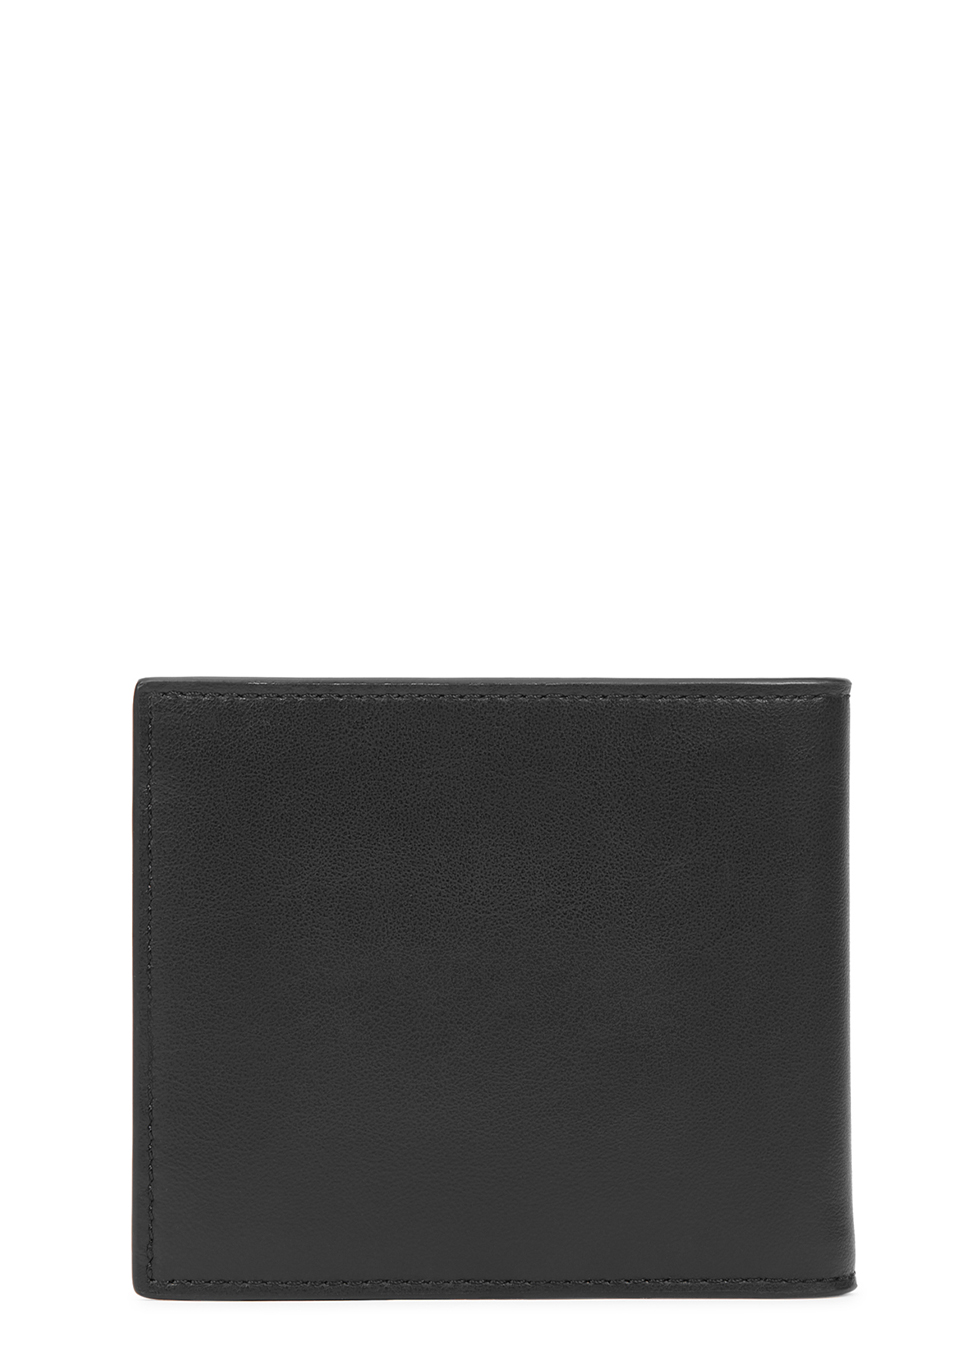 fendi black leather wallet